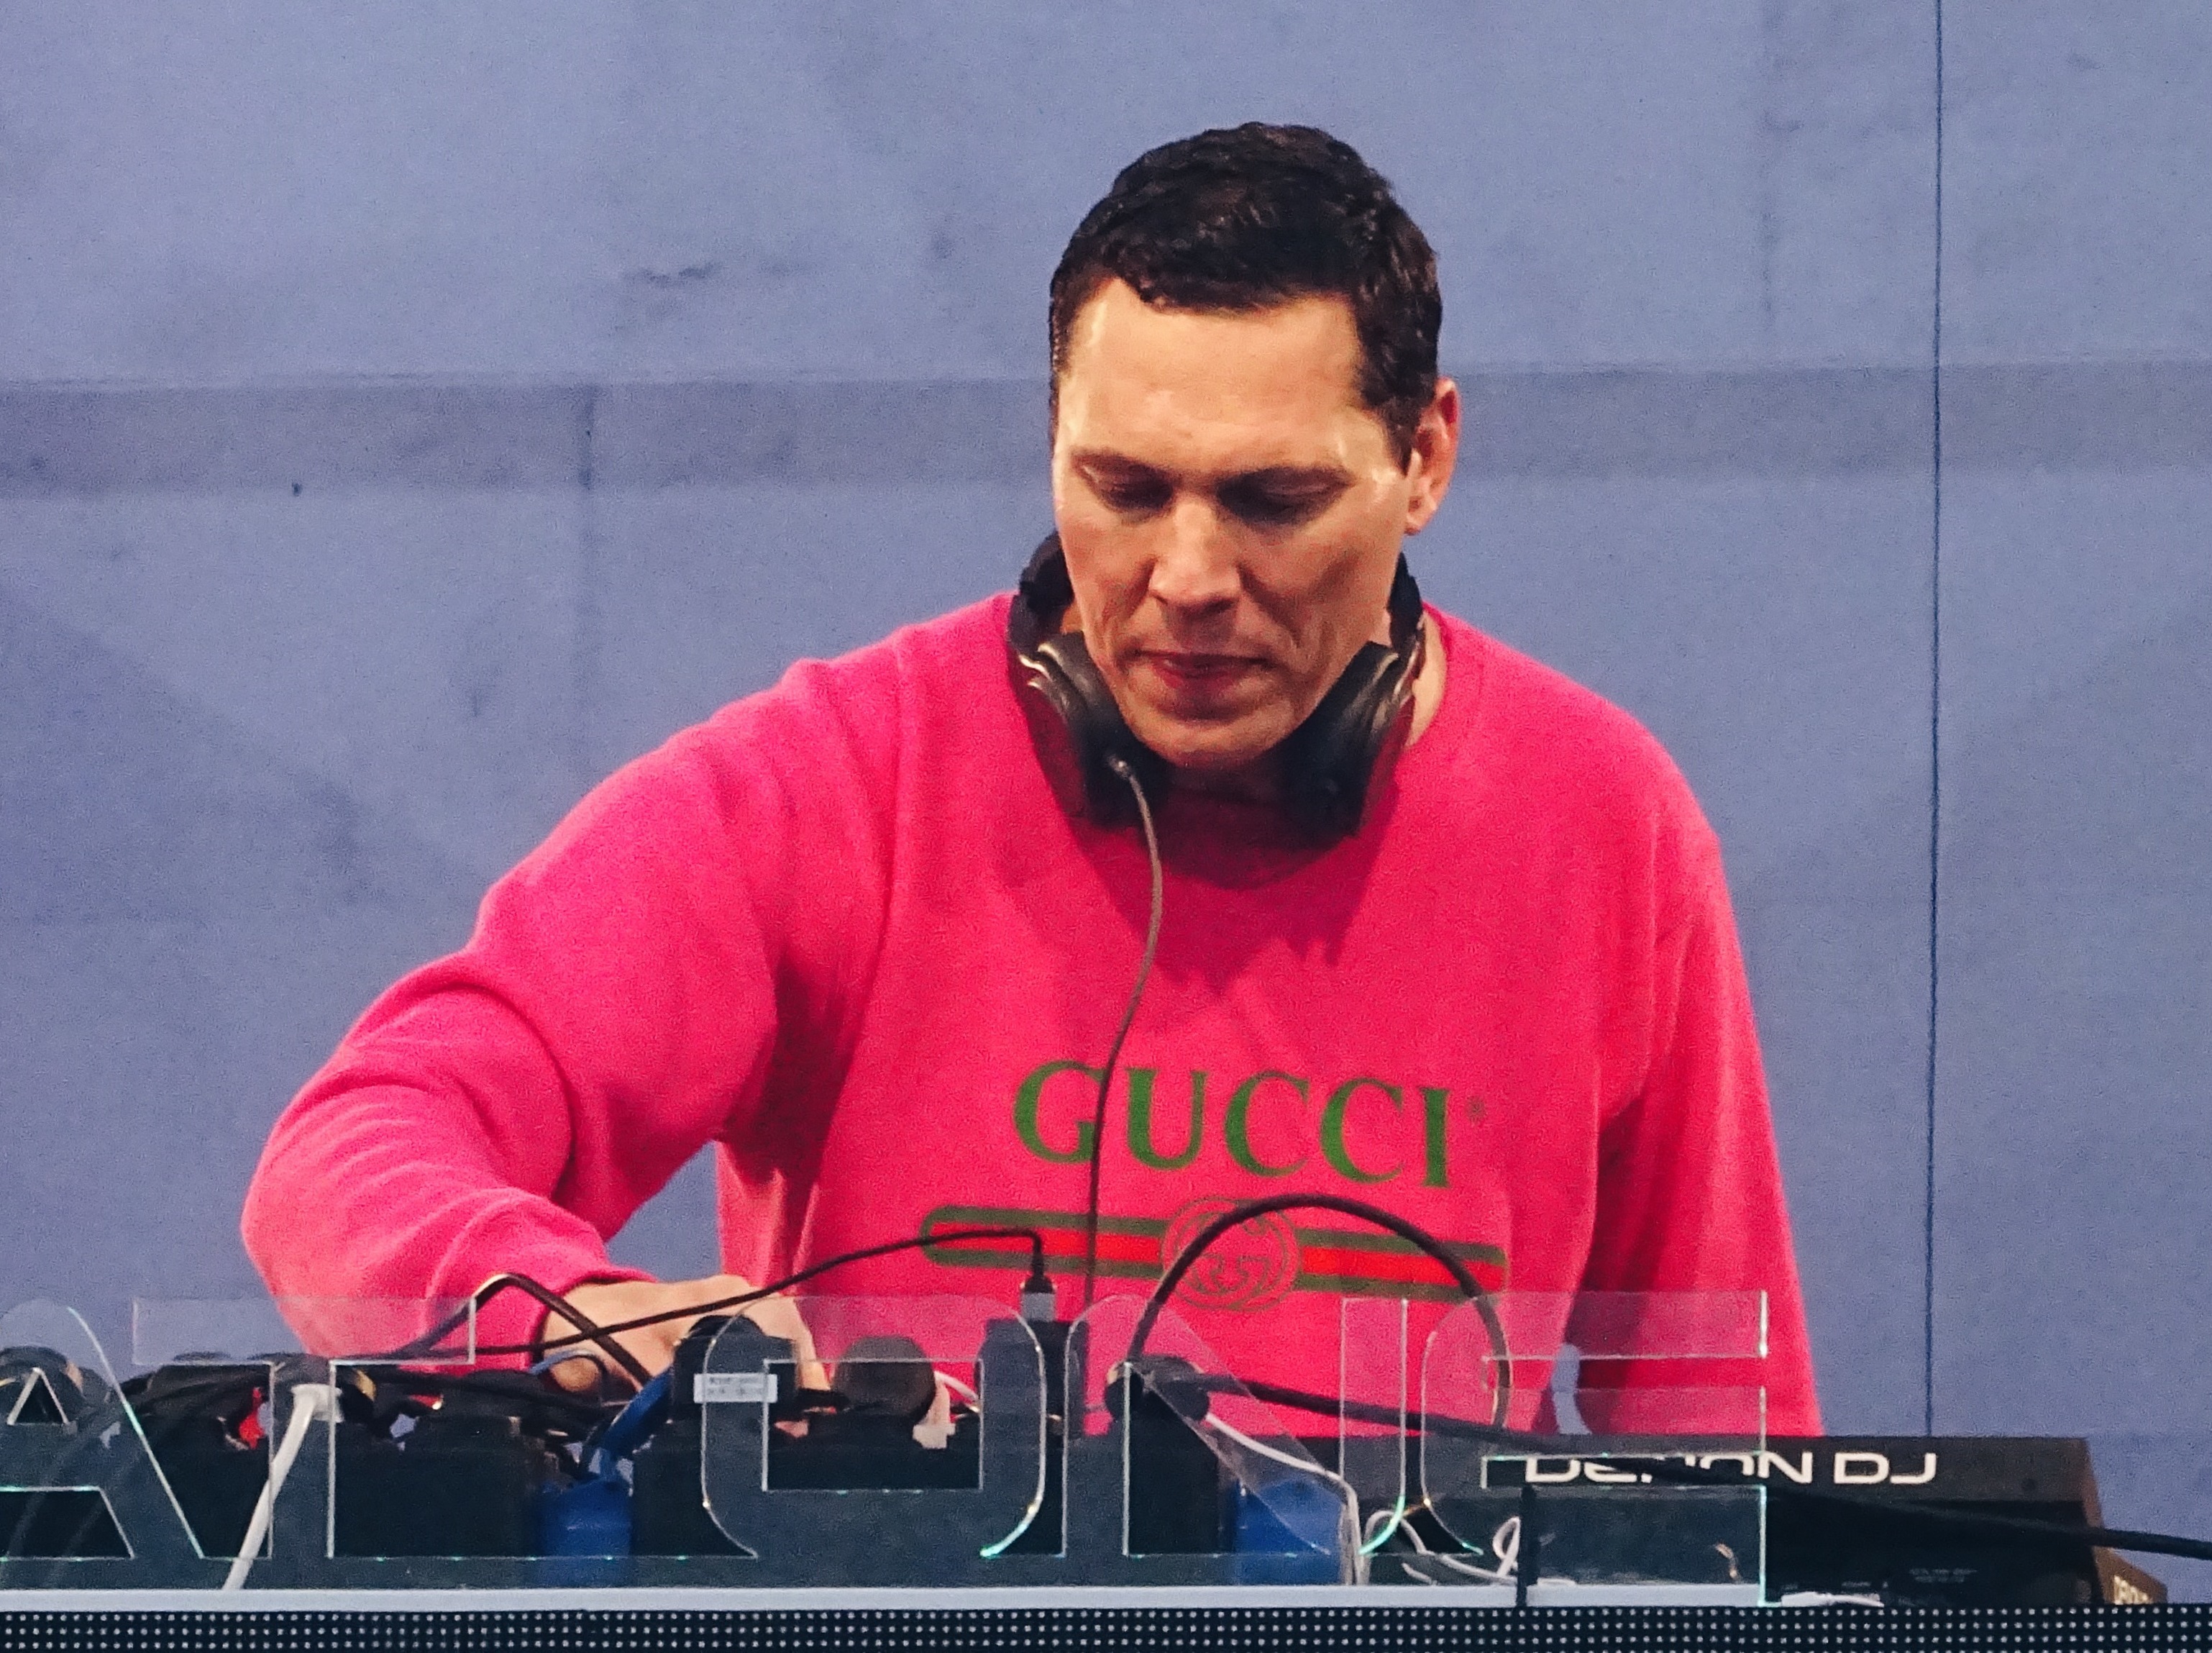 Tiësto, Dutch DJ and producer was born on January 17, 1969.